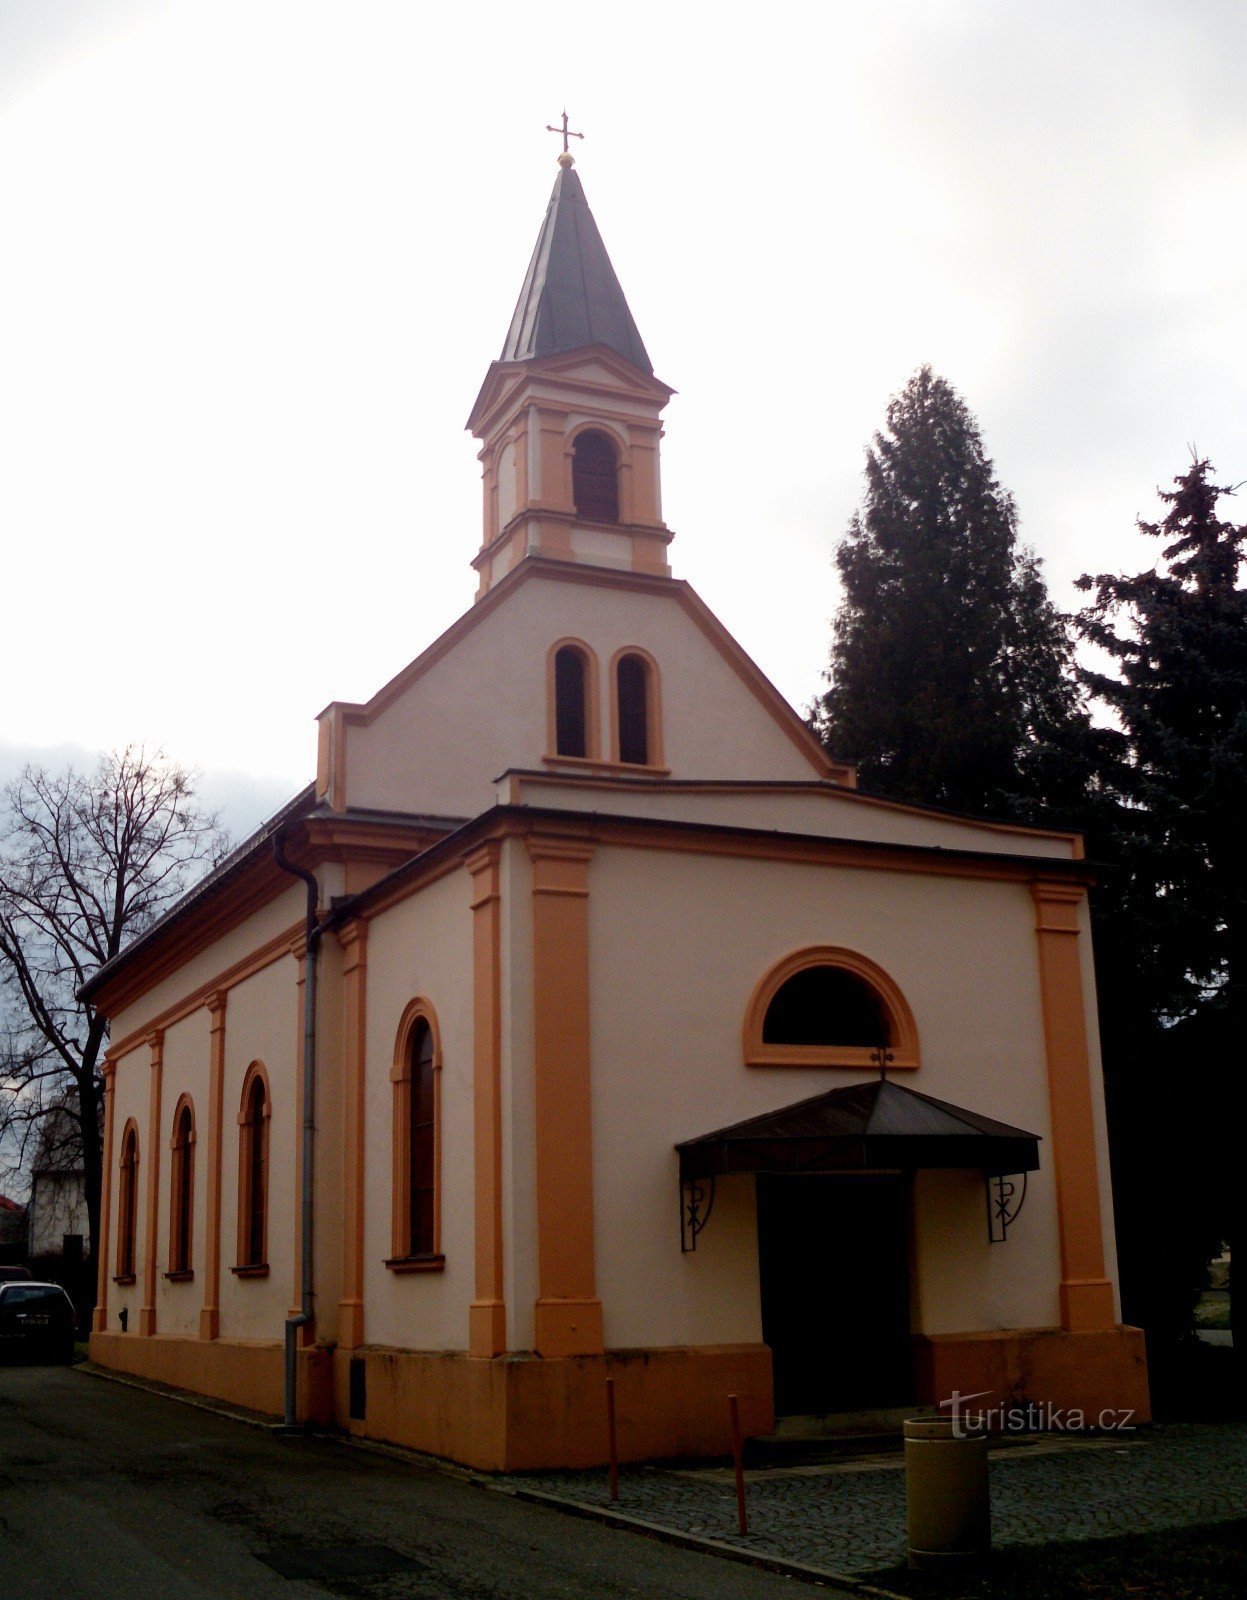 Otrokovice - Kvítkovice - nhà thờ St. Anne